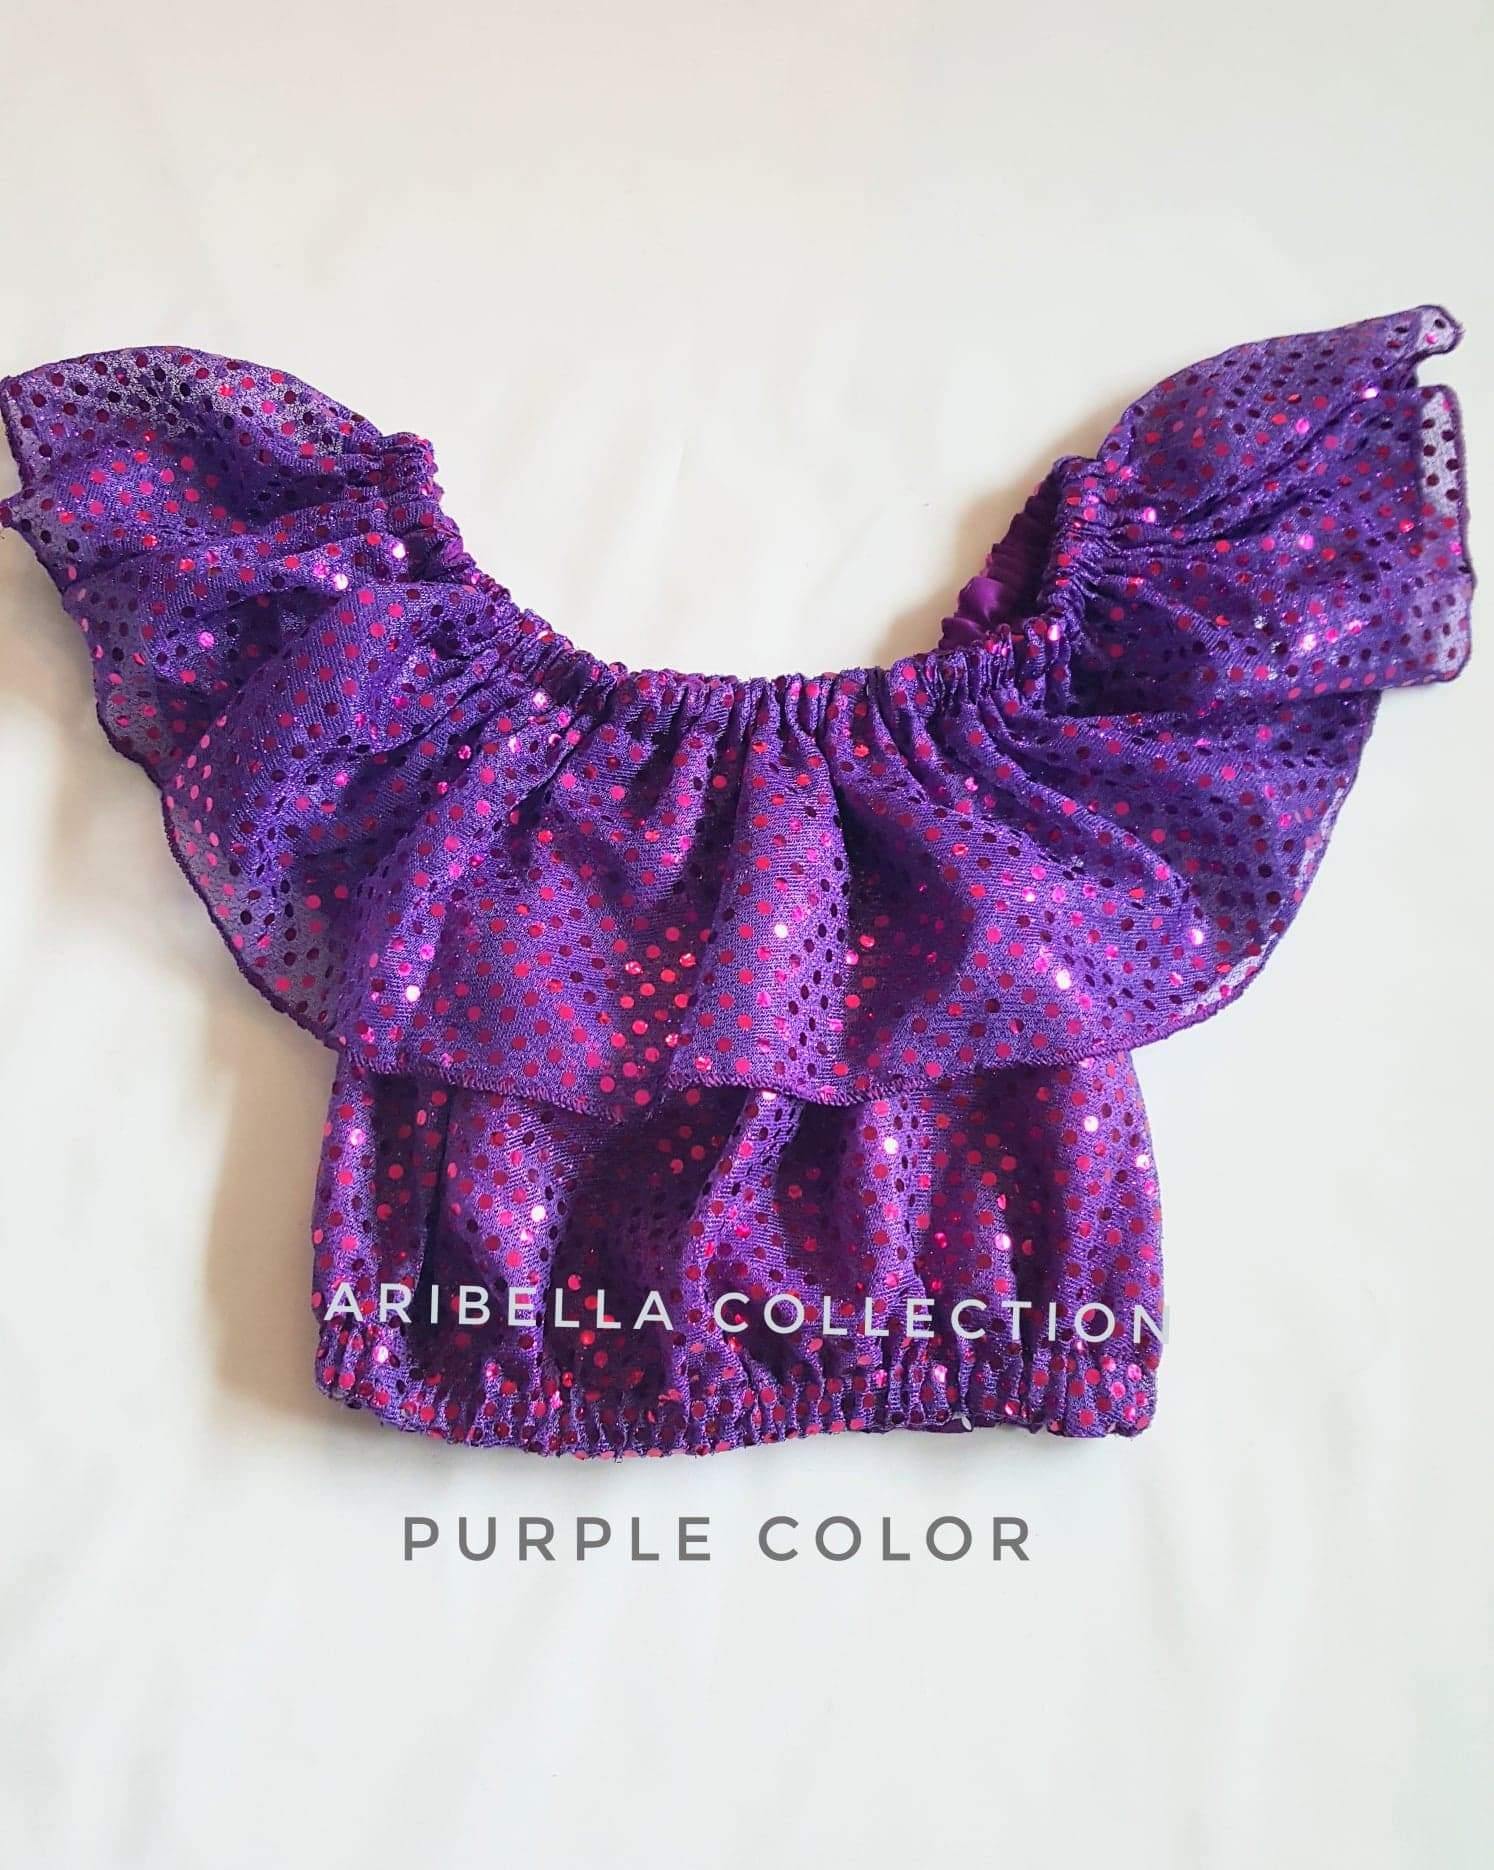 Confetti Dot Crop Top - Purple or Plum Color - Aribella Collection, Inc.